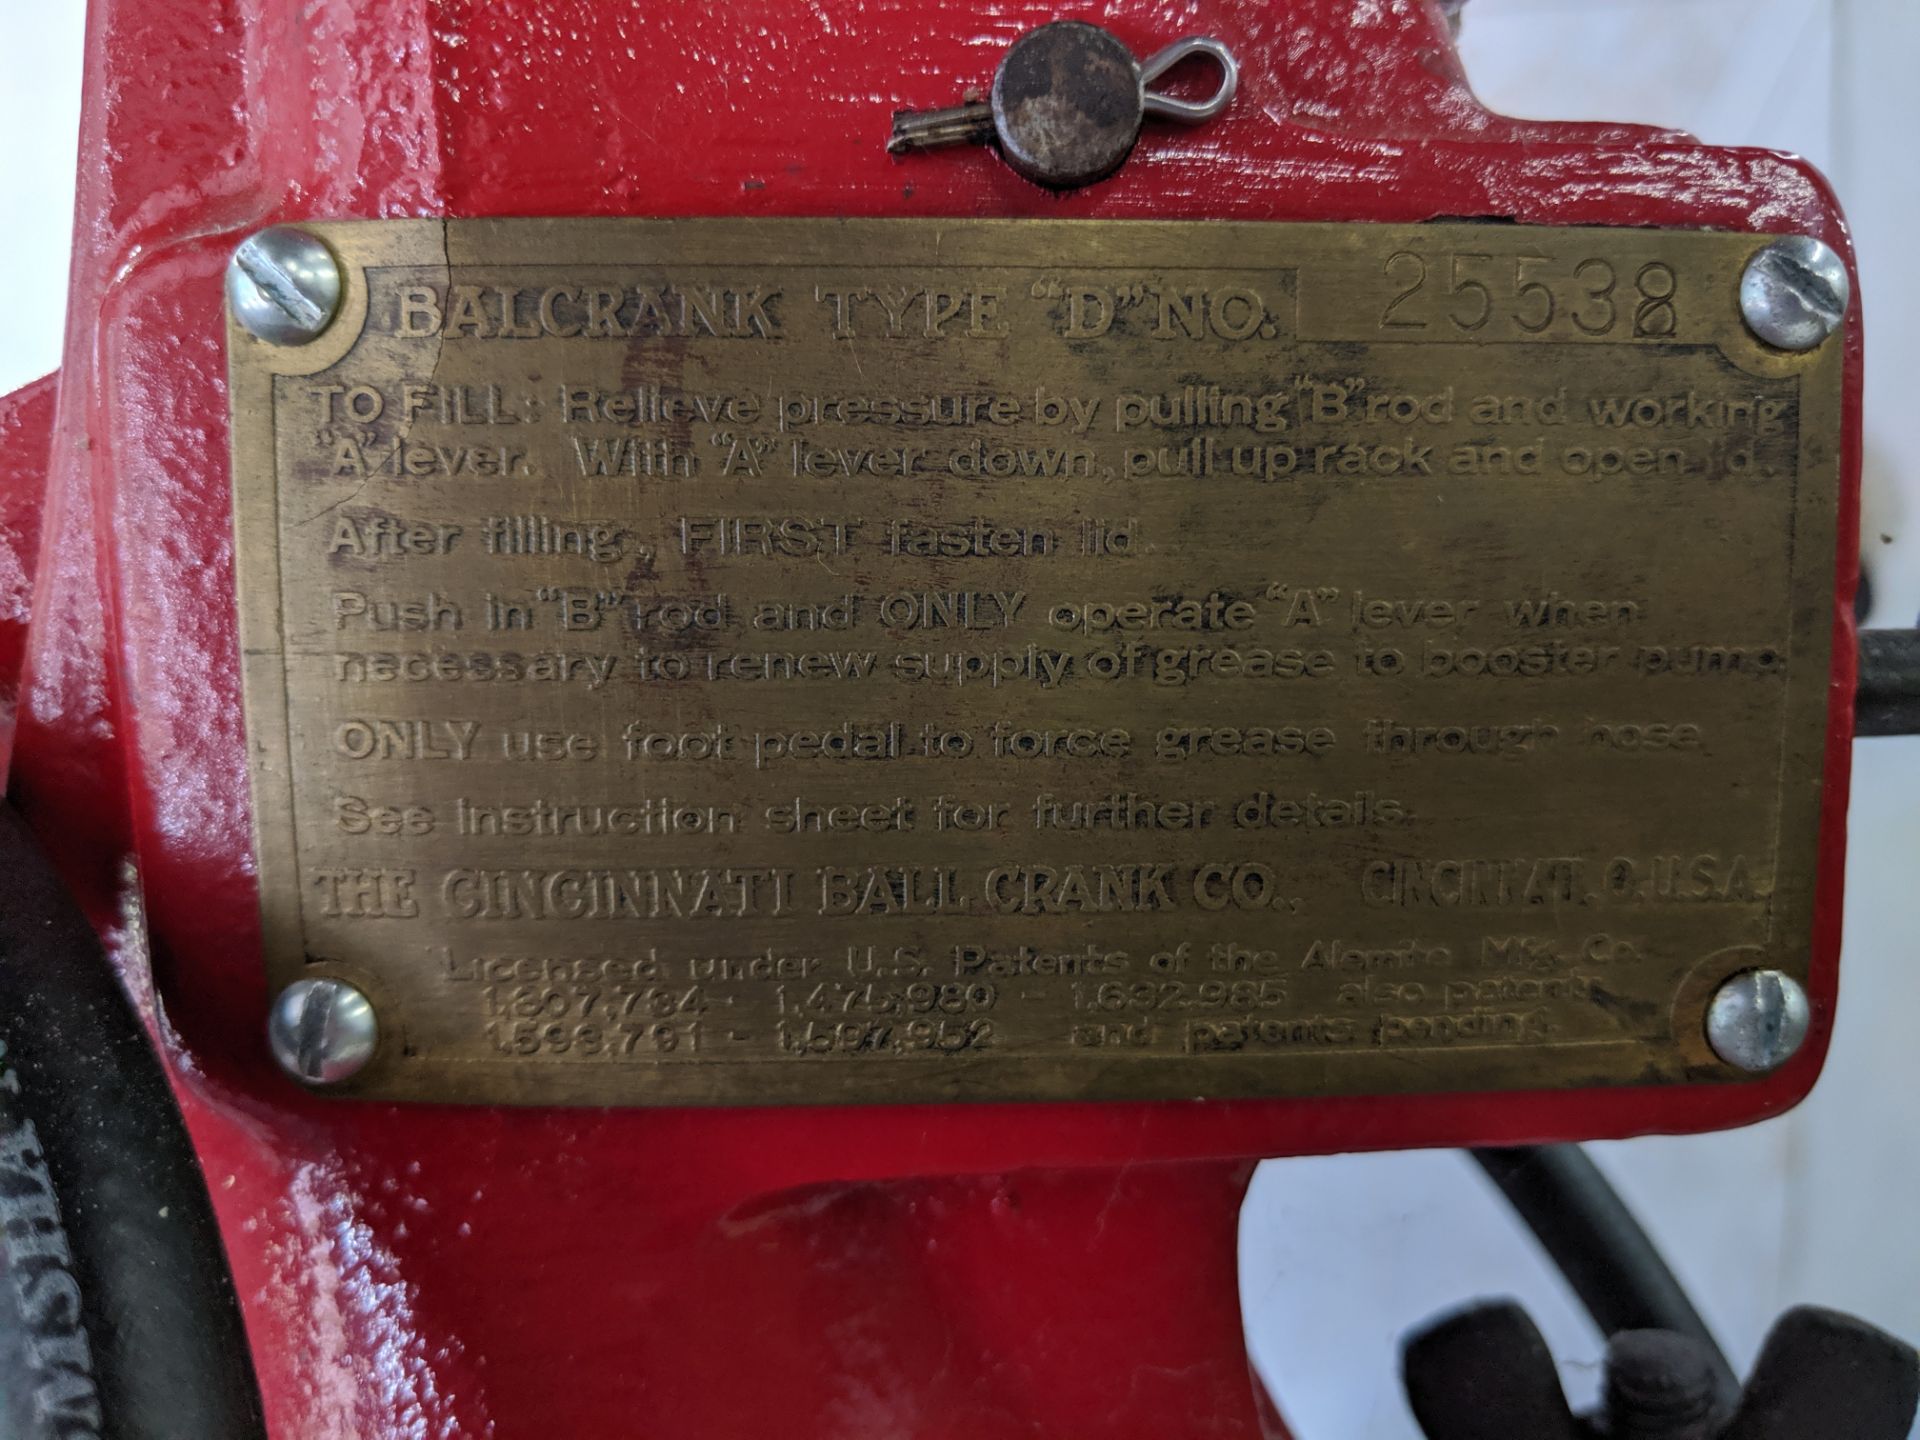 Balcrank Type D No. 25538 foot pedal lubrication pump mfd by The Cincinnati Ball Crank Co. - Image 2 of 3